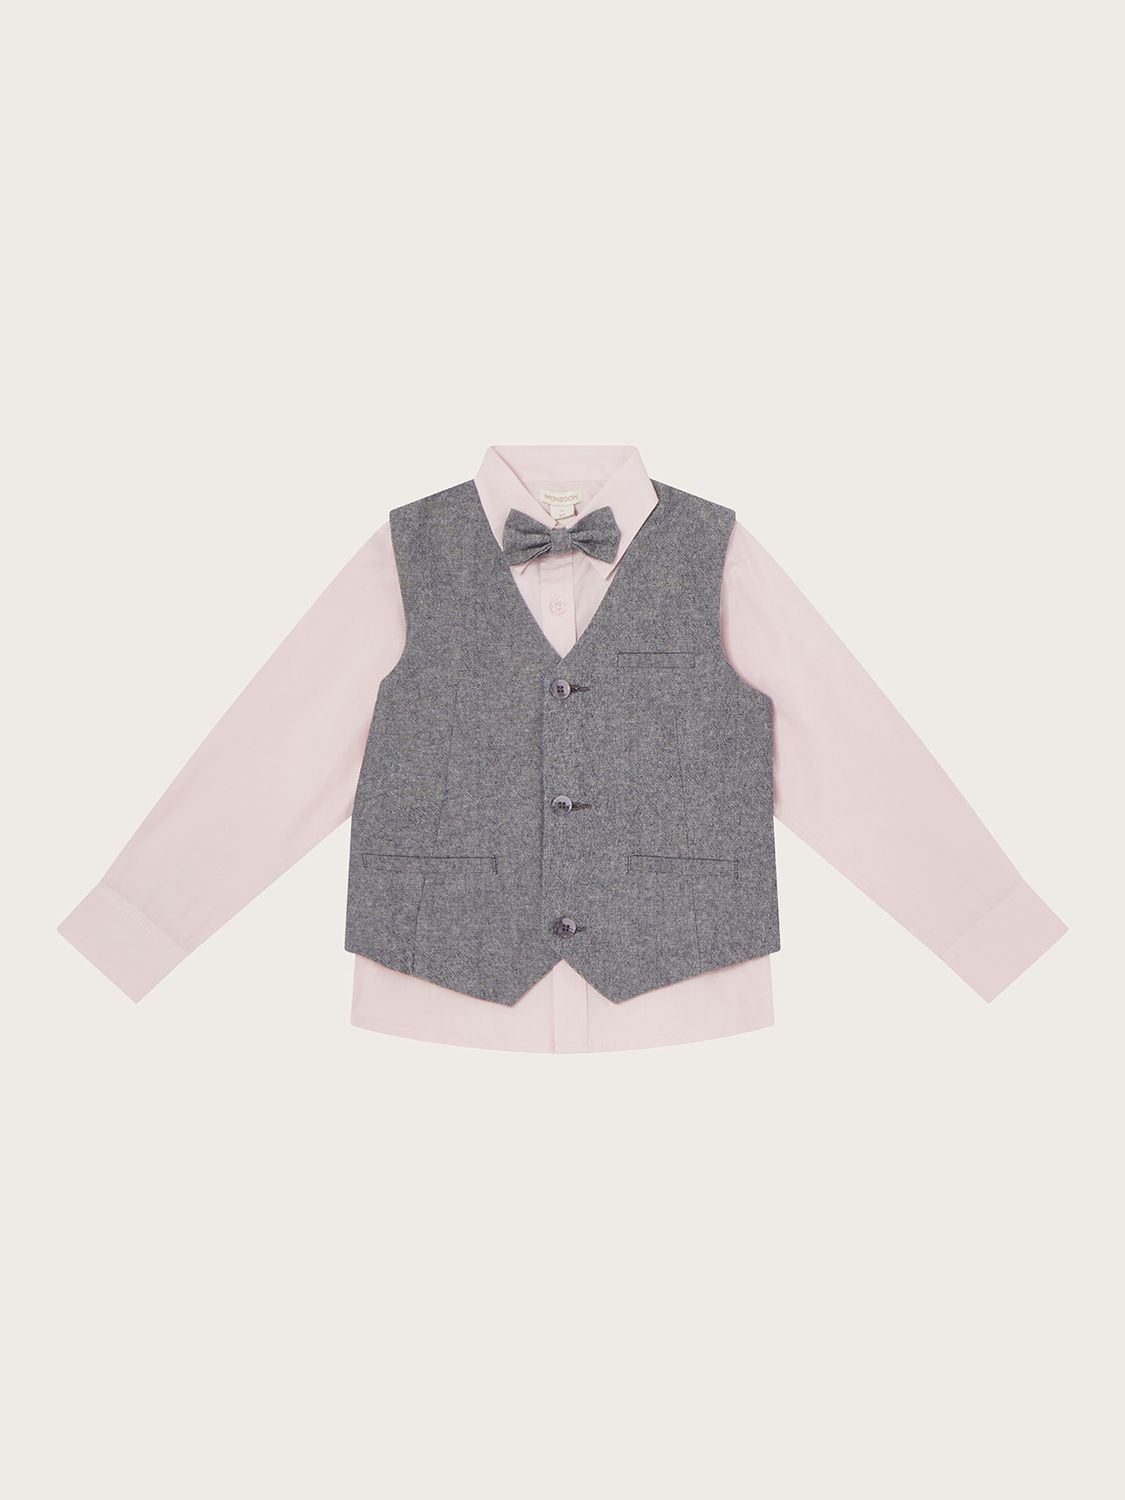 Monsoon Kids' Three-Piece Waistcoat, Shirt & Bow Tie Set, Grey